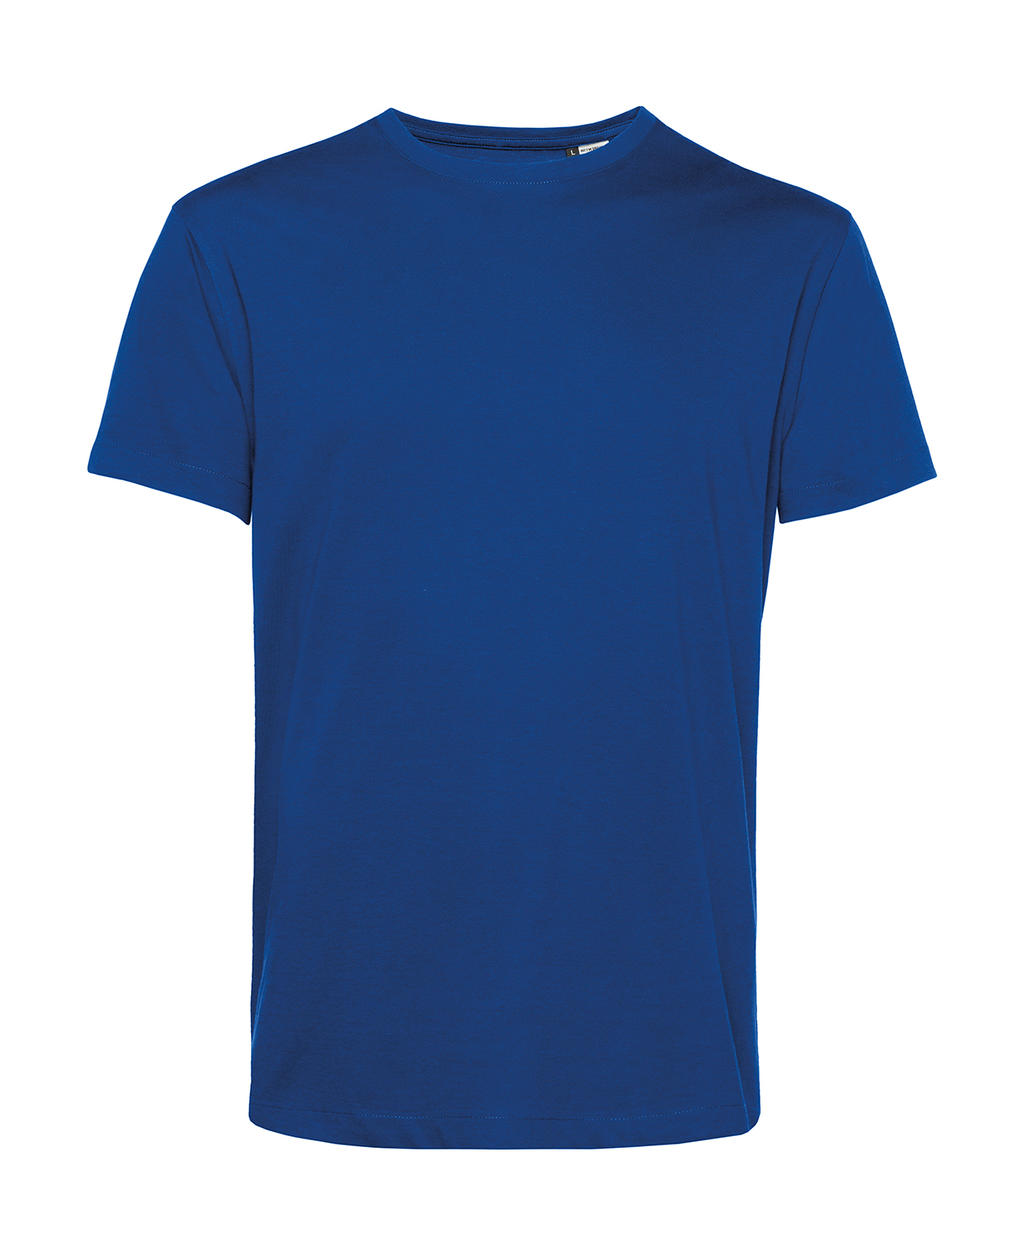 Tričko BC Organic Inspire E150 - modré, XL